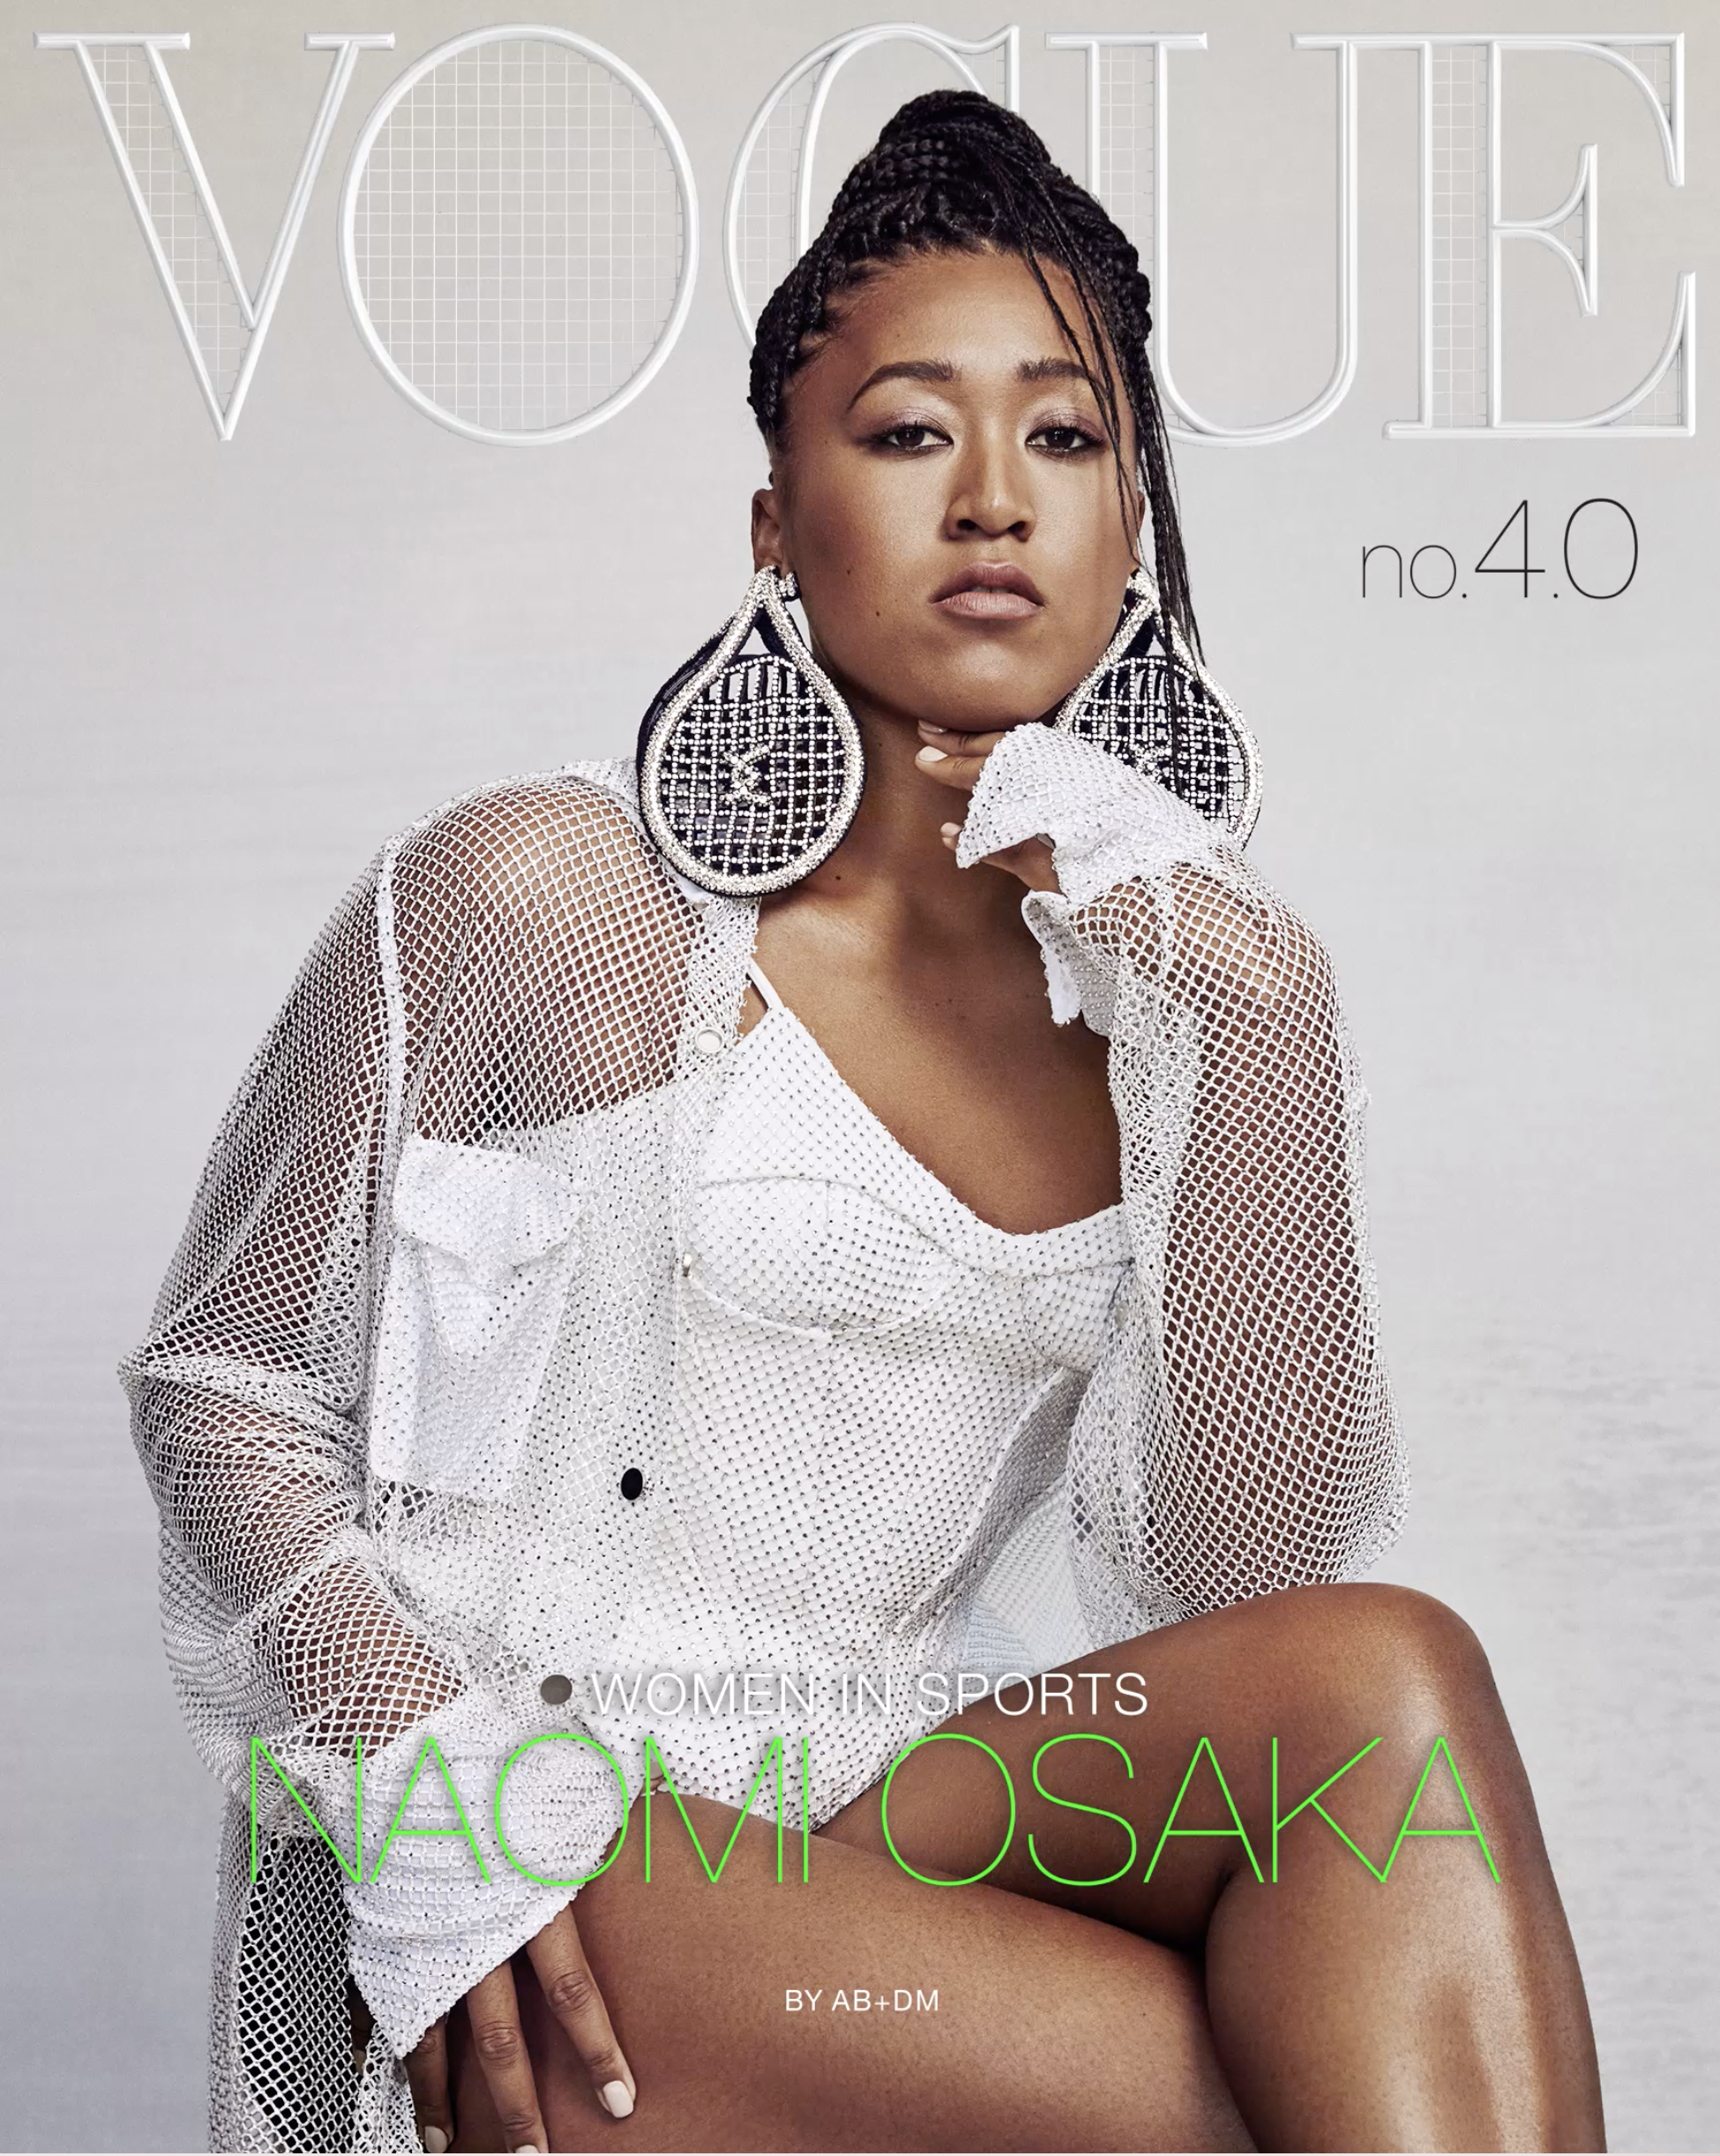 Tennis superstar Naomi Osaka graces January cover of Vogue